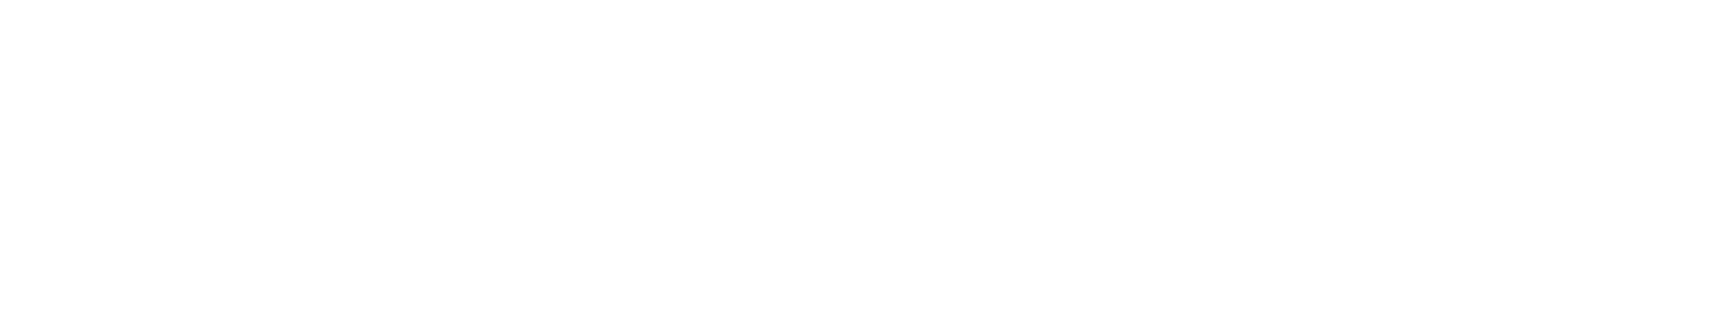 天美传媒 Libraries logo